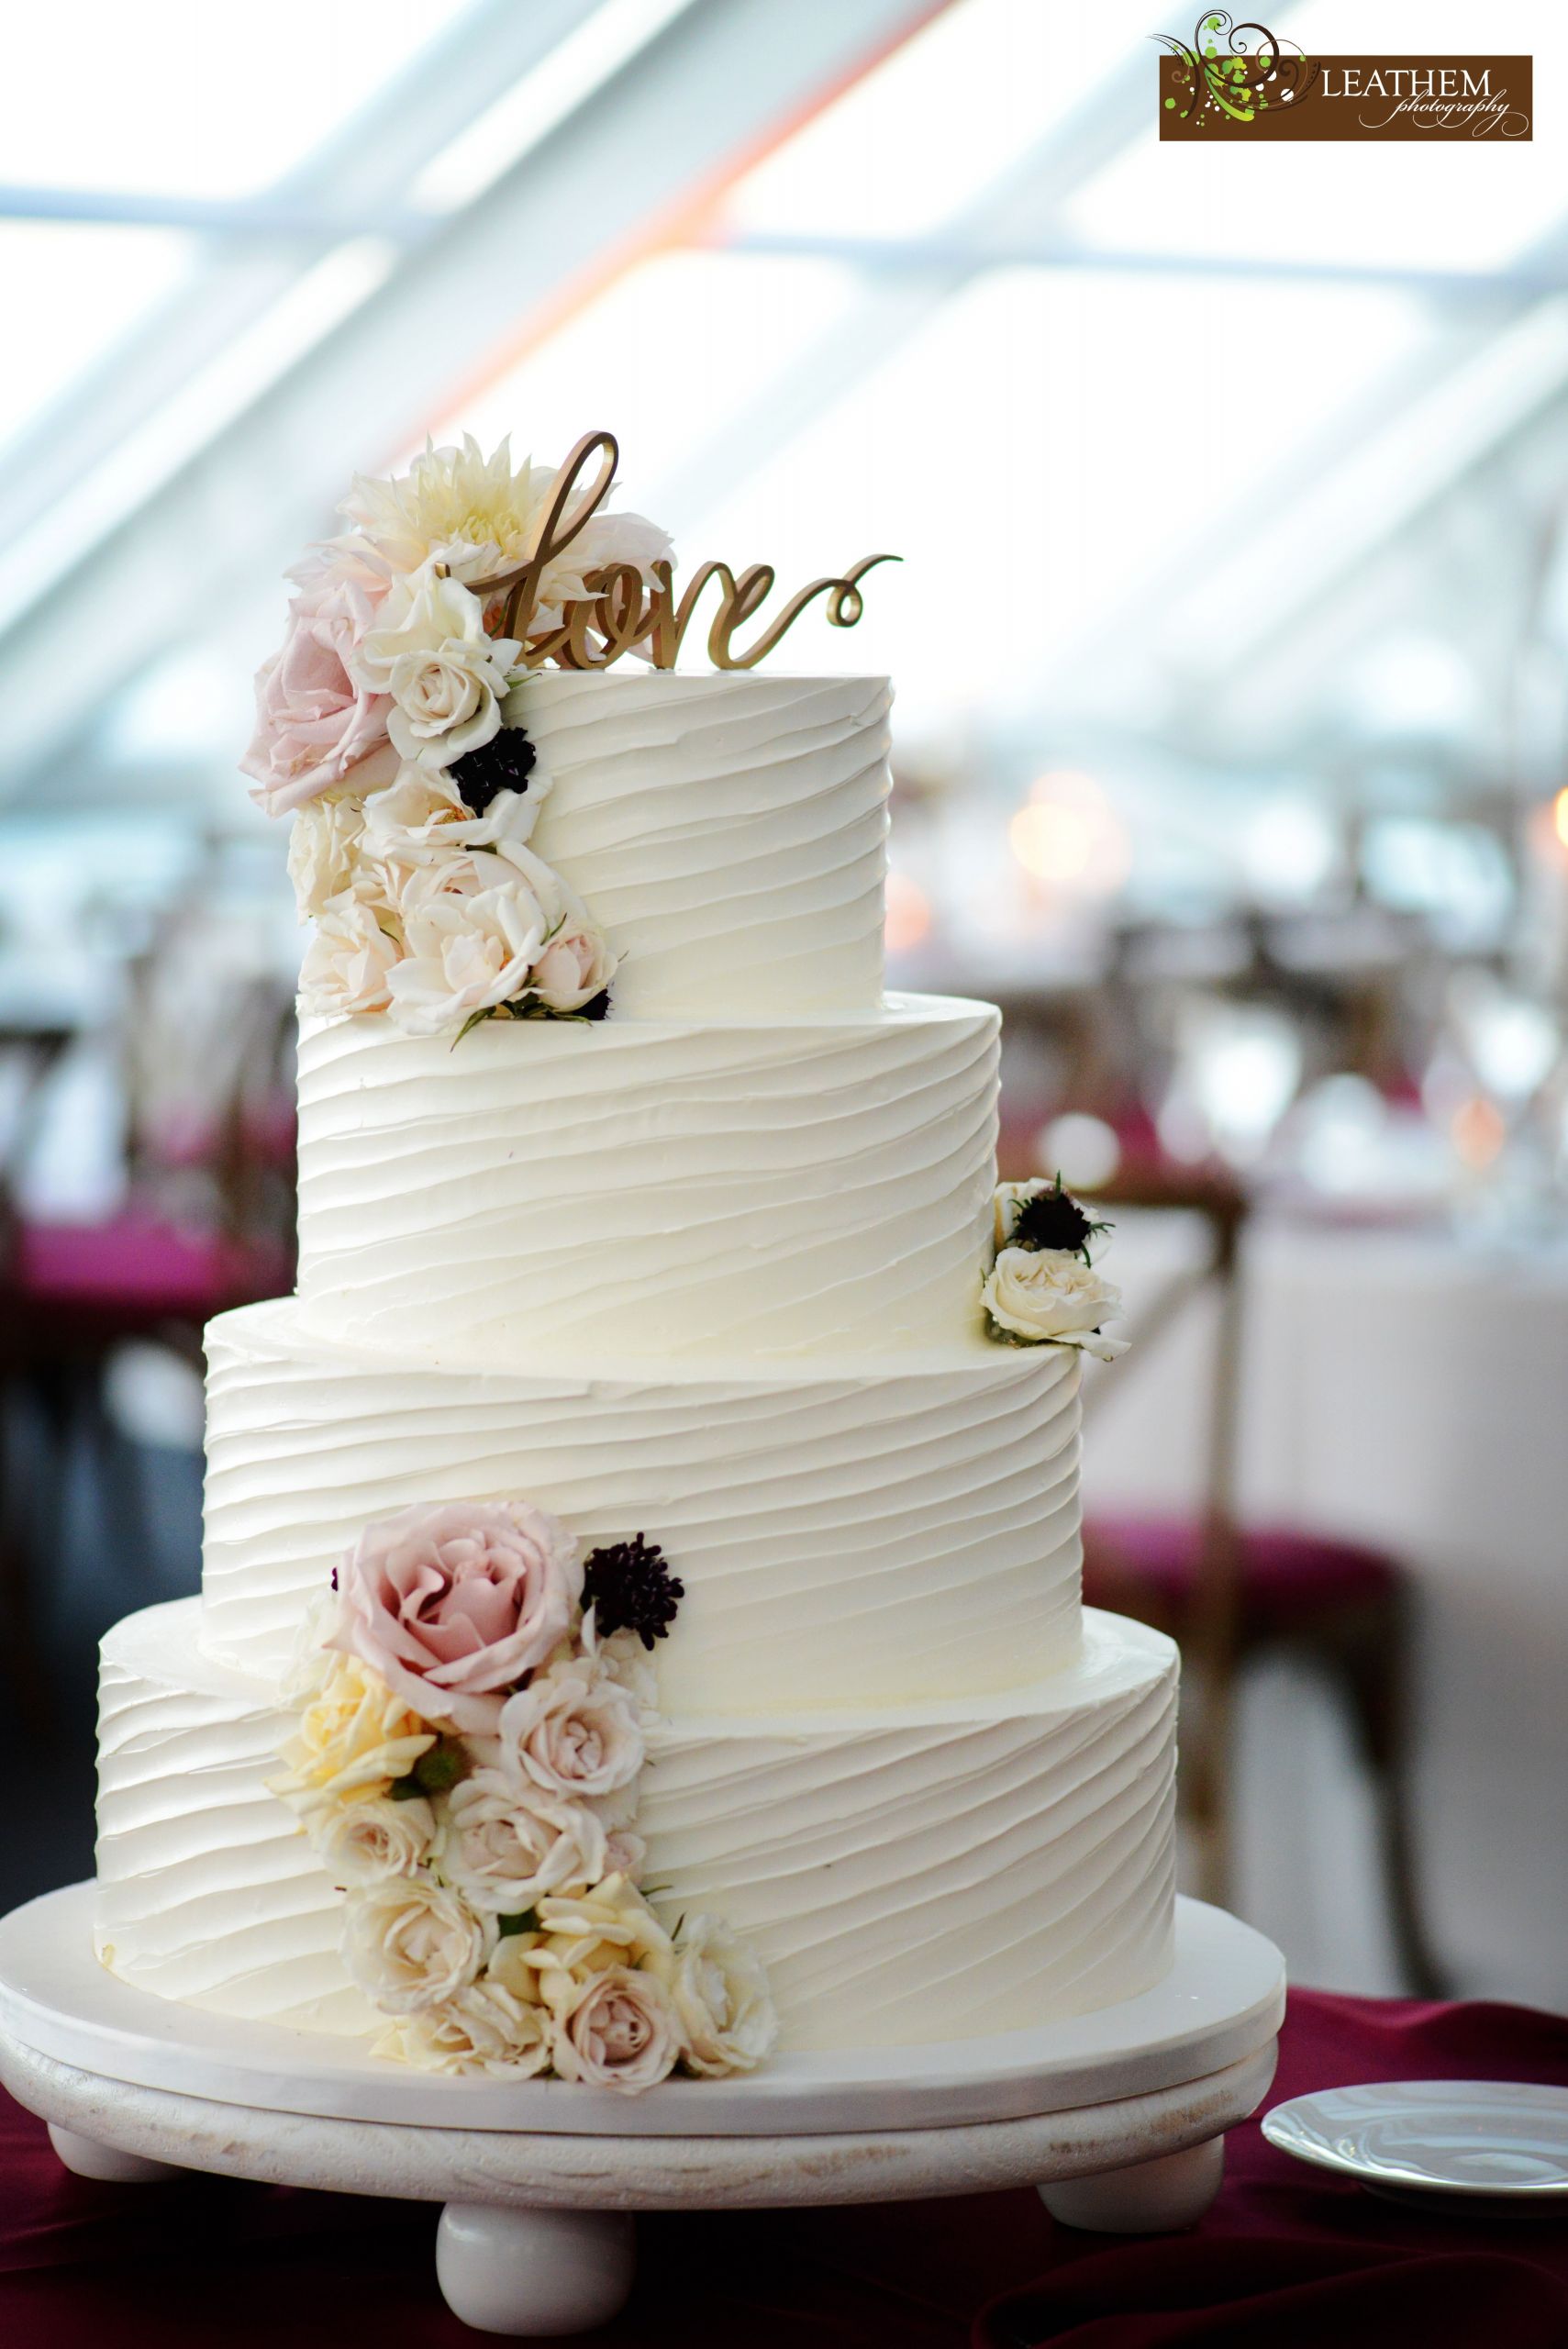 Buttercream Wedding Cakes Pinterest
 Gorgeous textured buttercream wedding cake adorned with